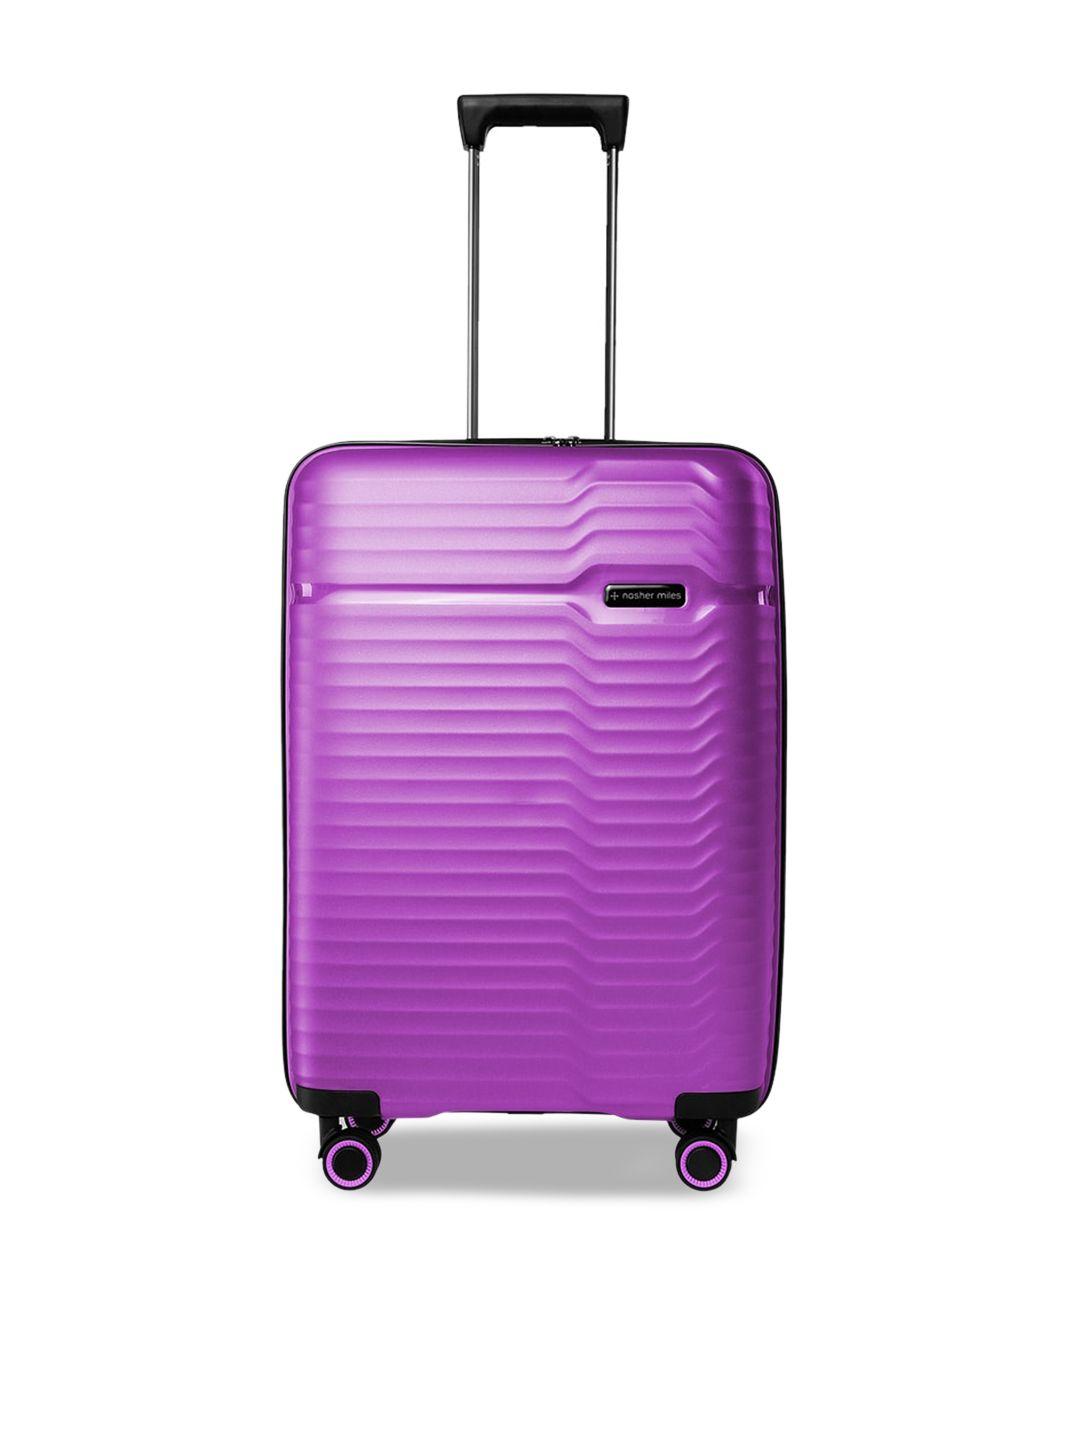 nasher-miles-purple-hard-sided-luggage-trolley-bag